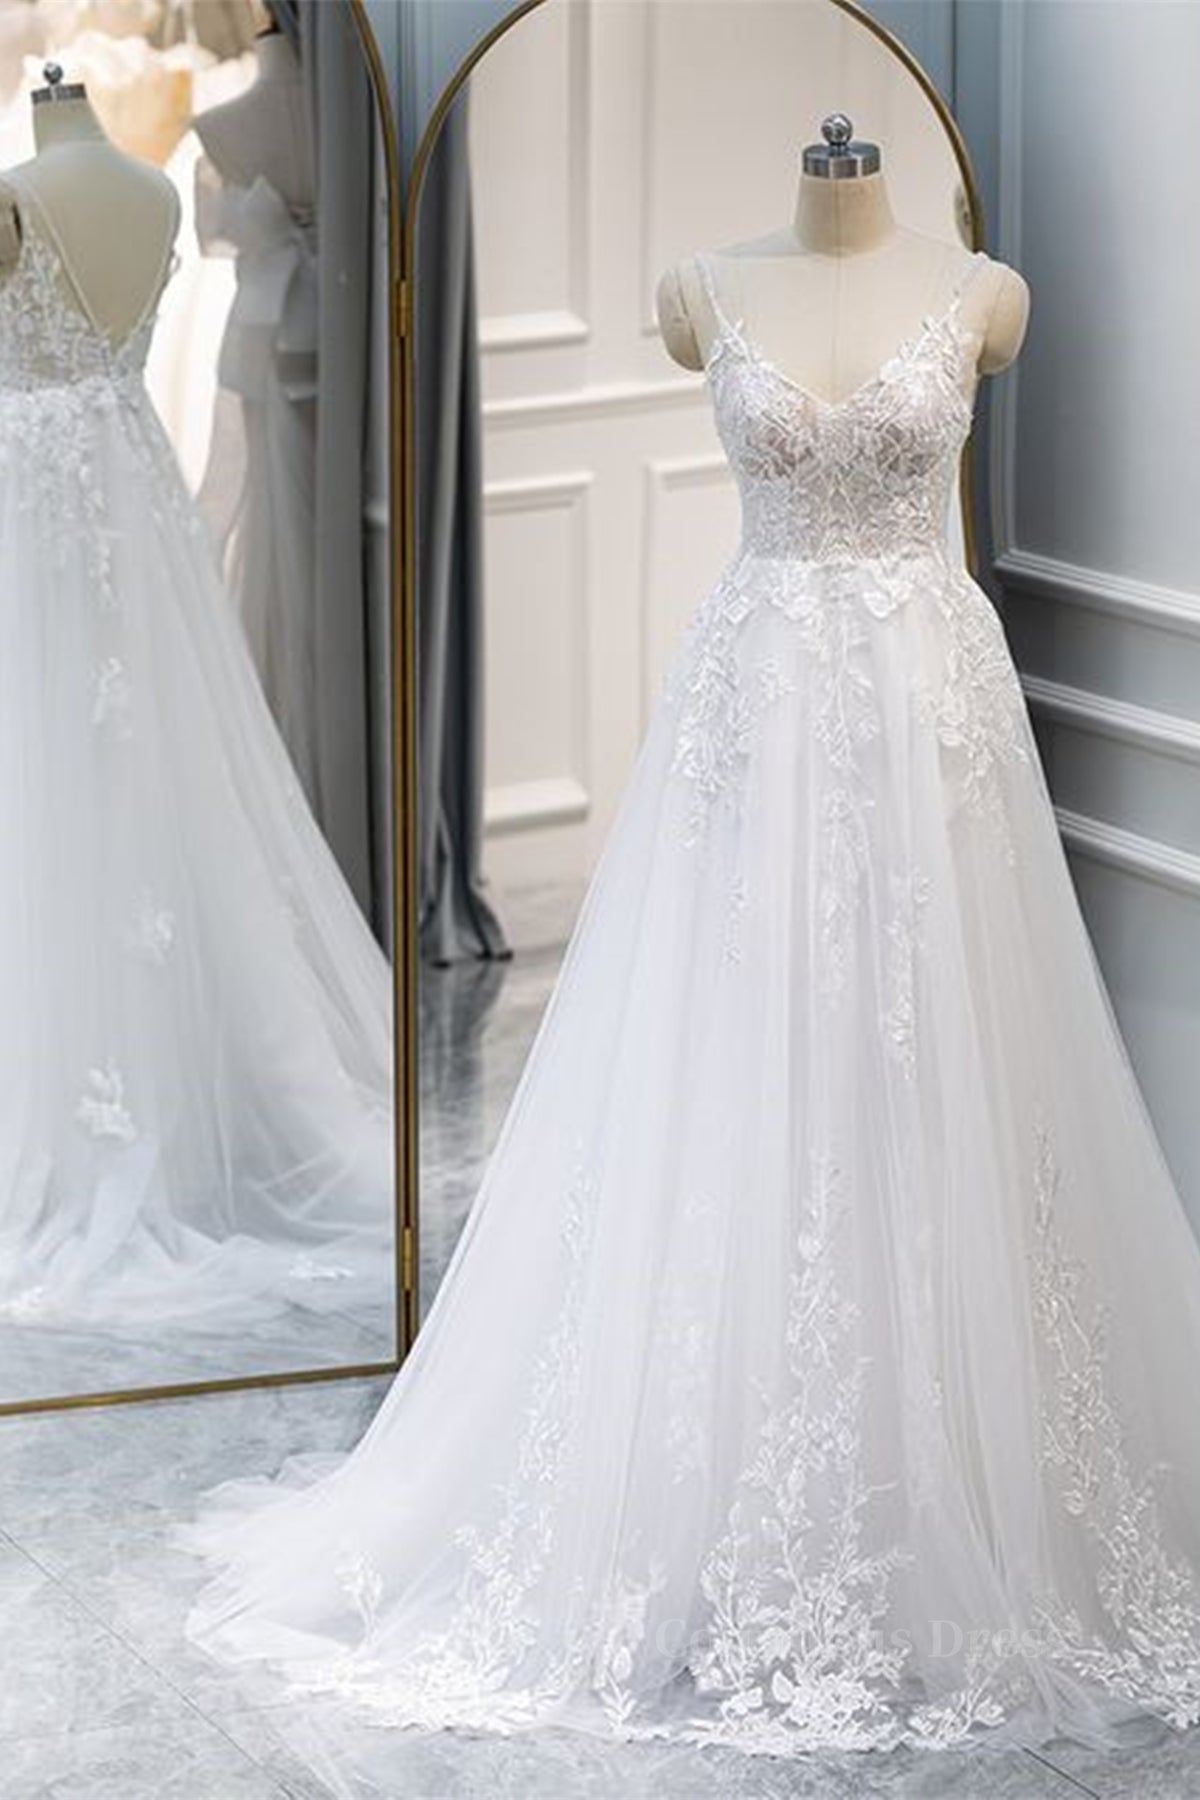 Wedding Dress Style, A Line V Neck White Lace Long Prom Dress, White Lace Wedding Dress, White Formal Evening Dress